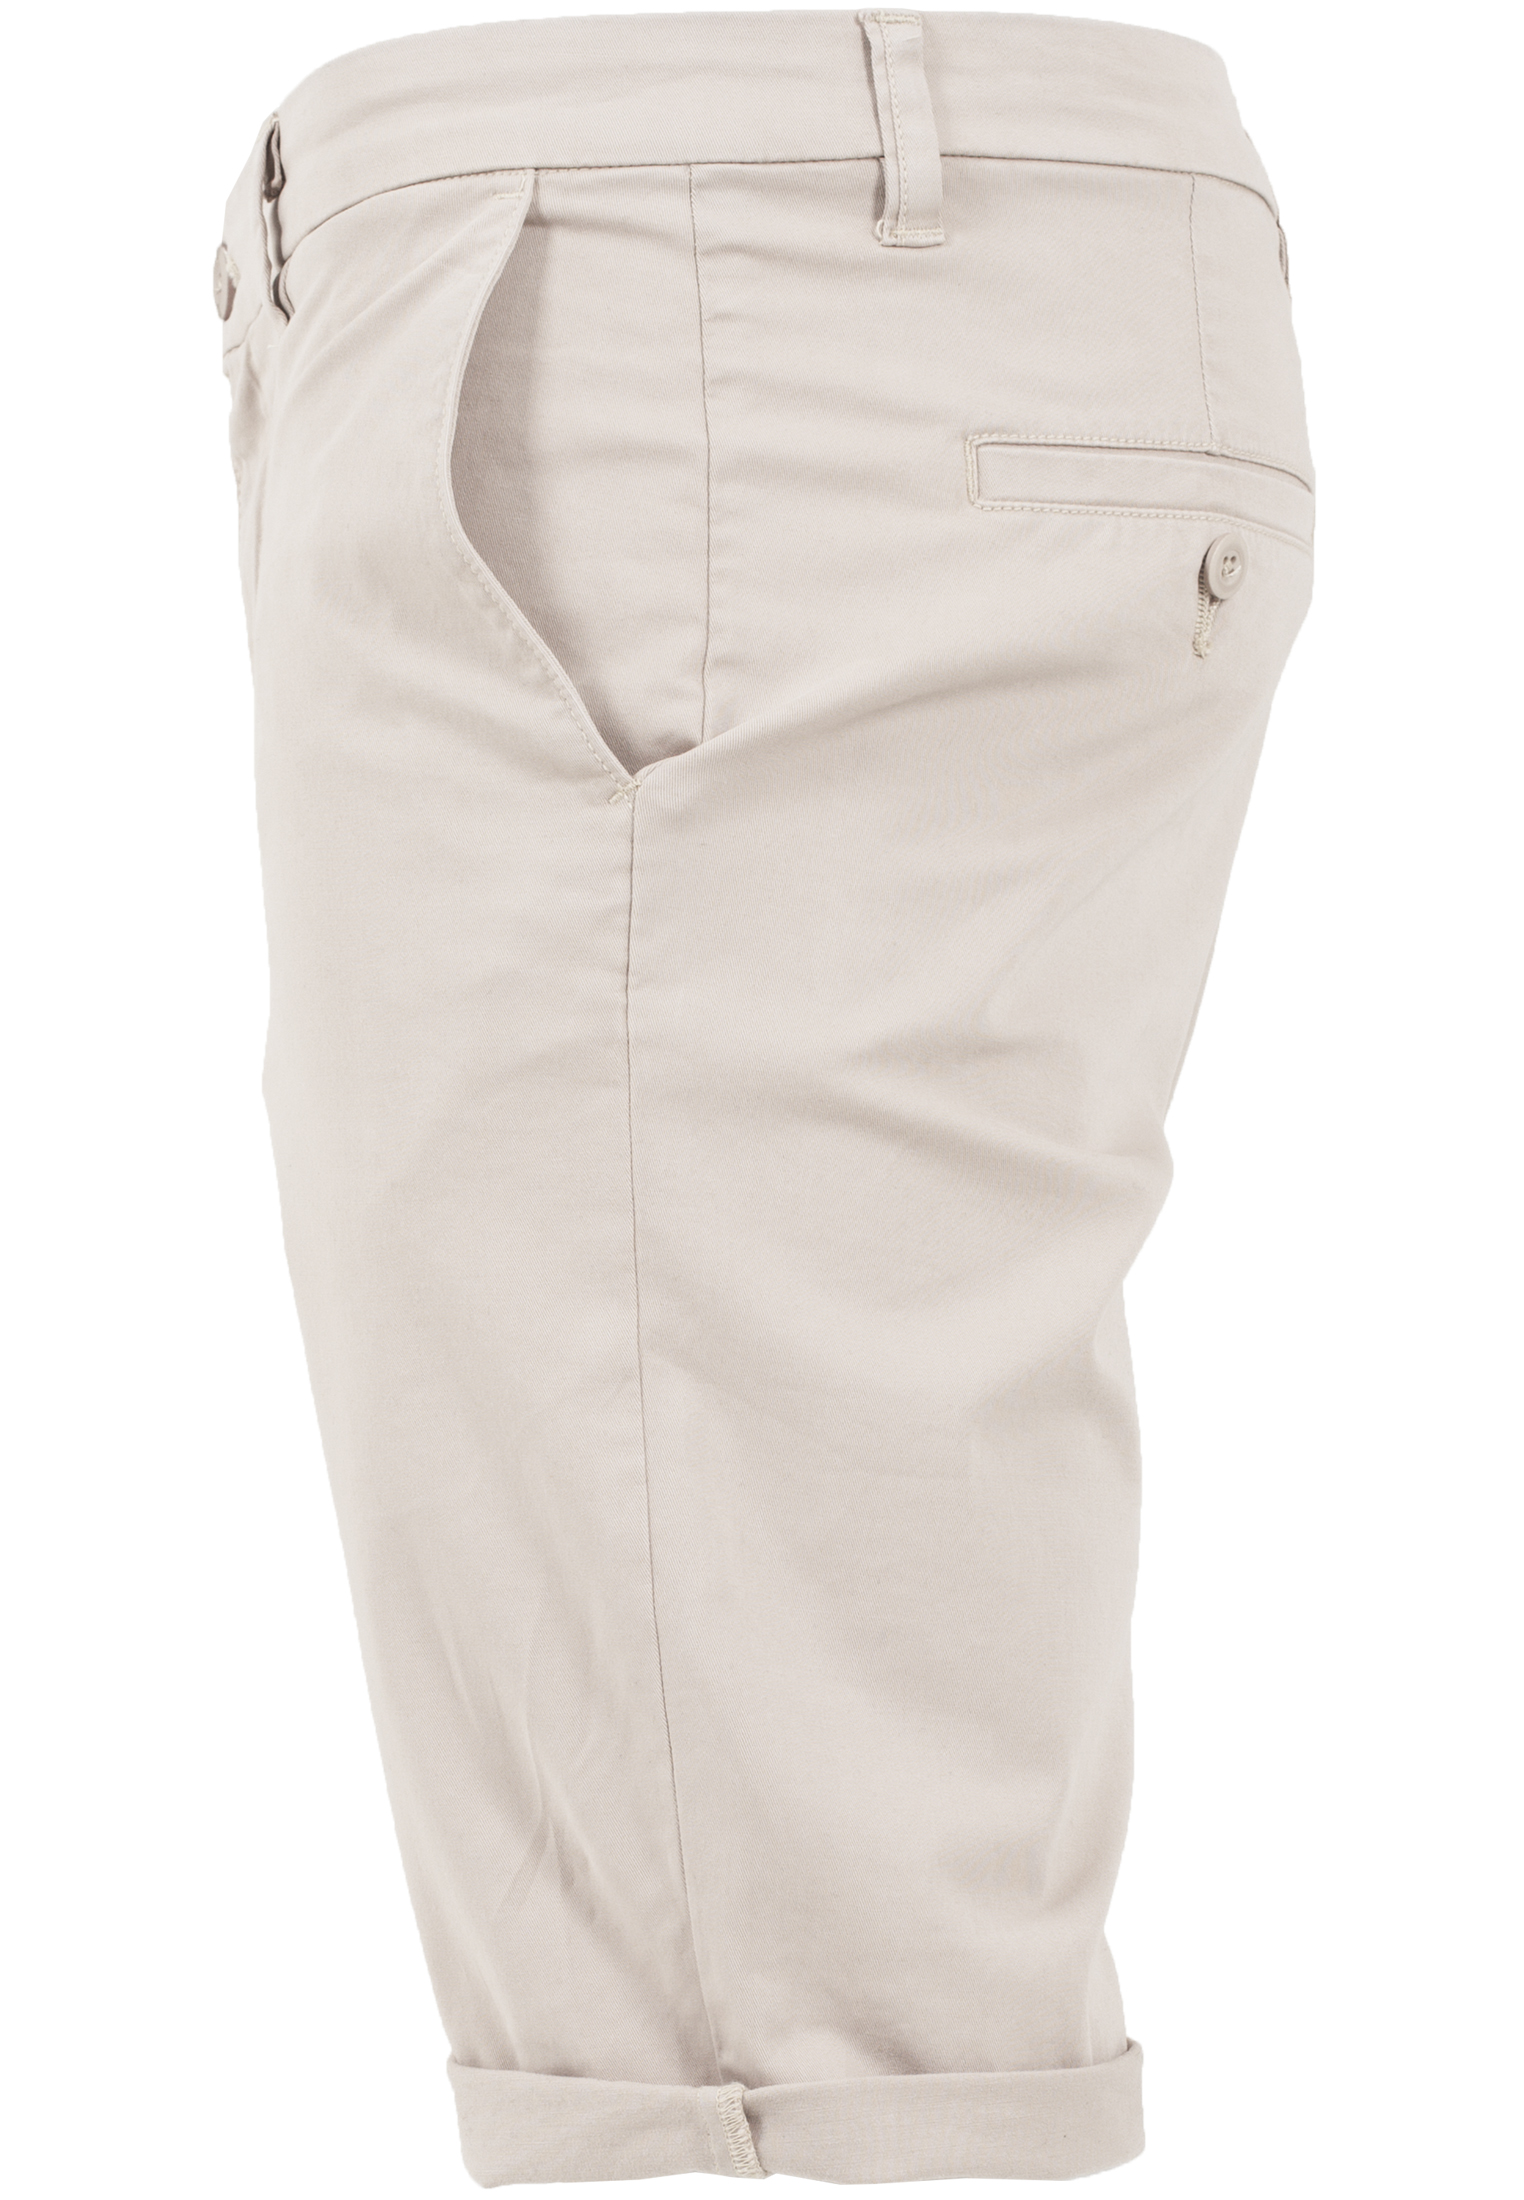 Cargo Hosen & Shorts Stretch Turnup Chino Shorts in Farbe sand